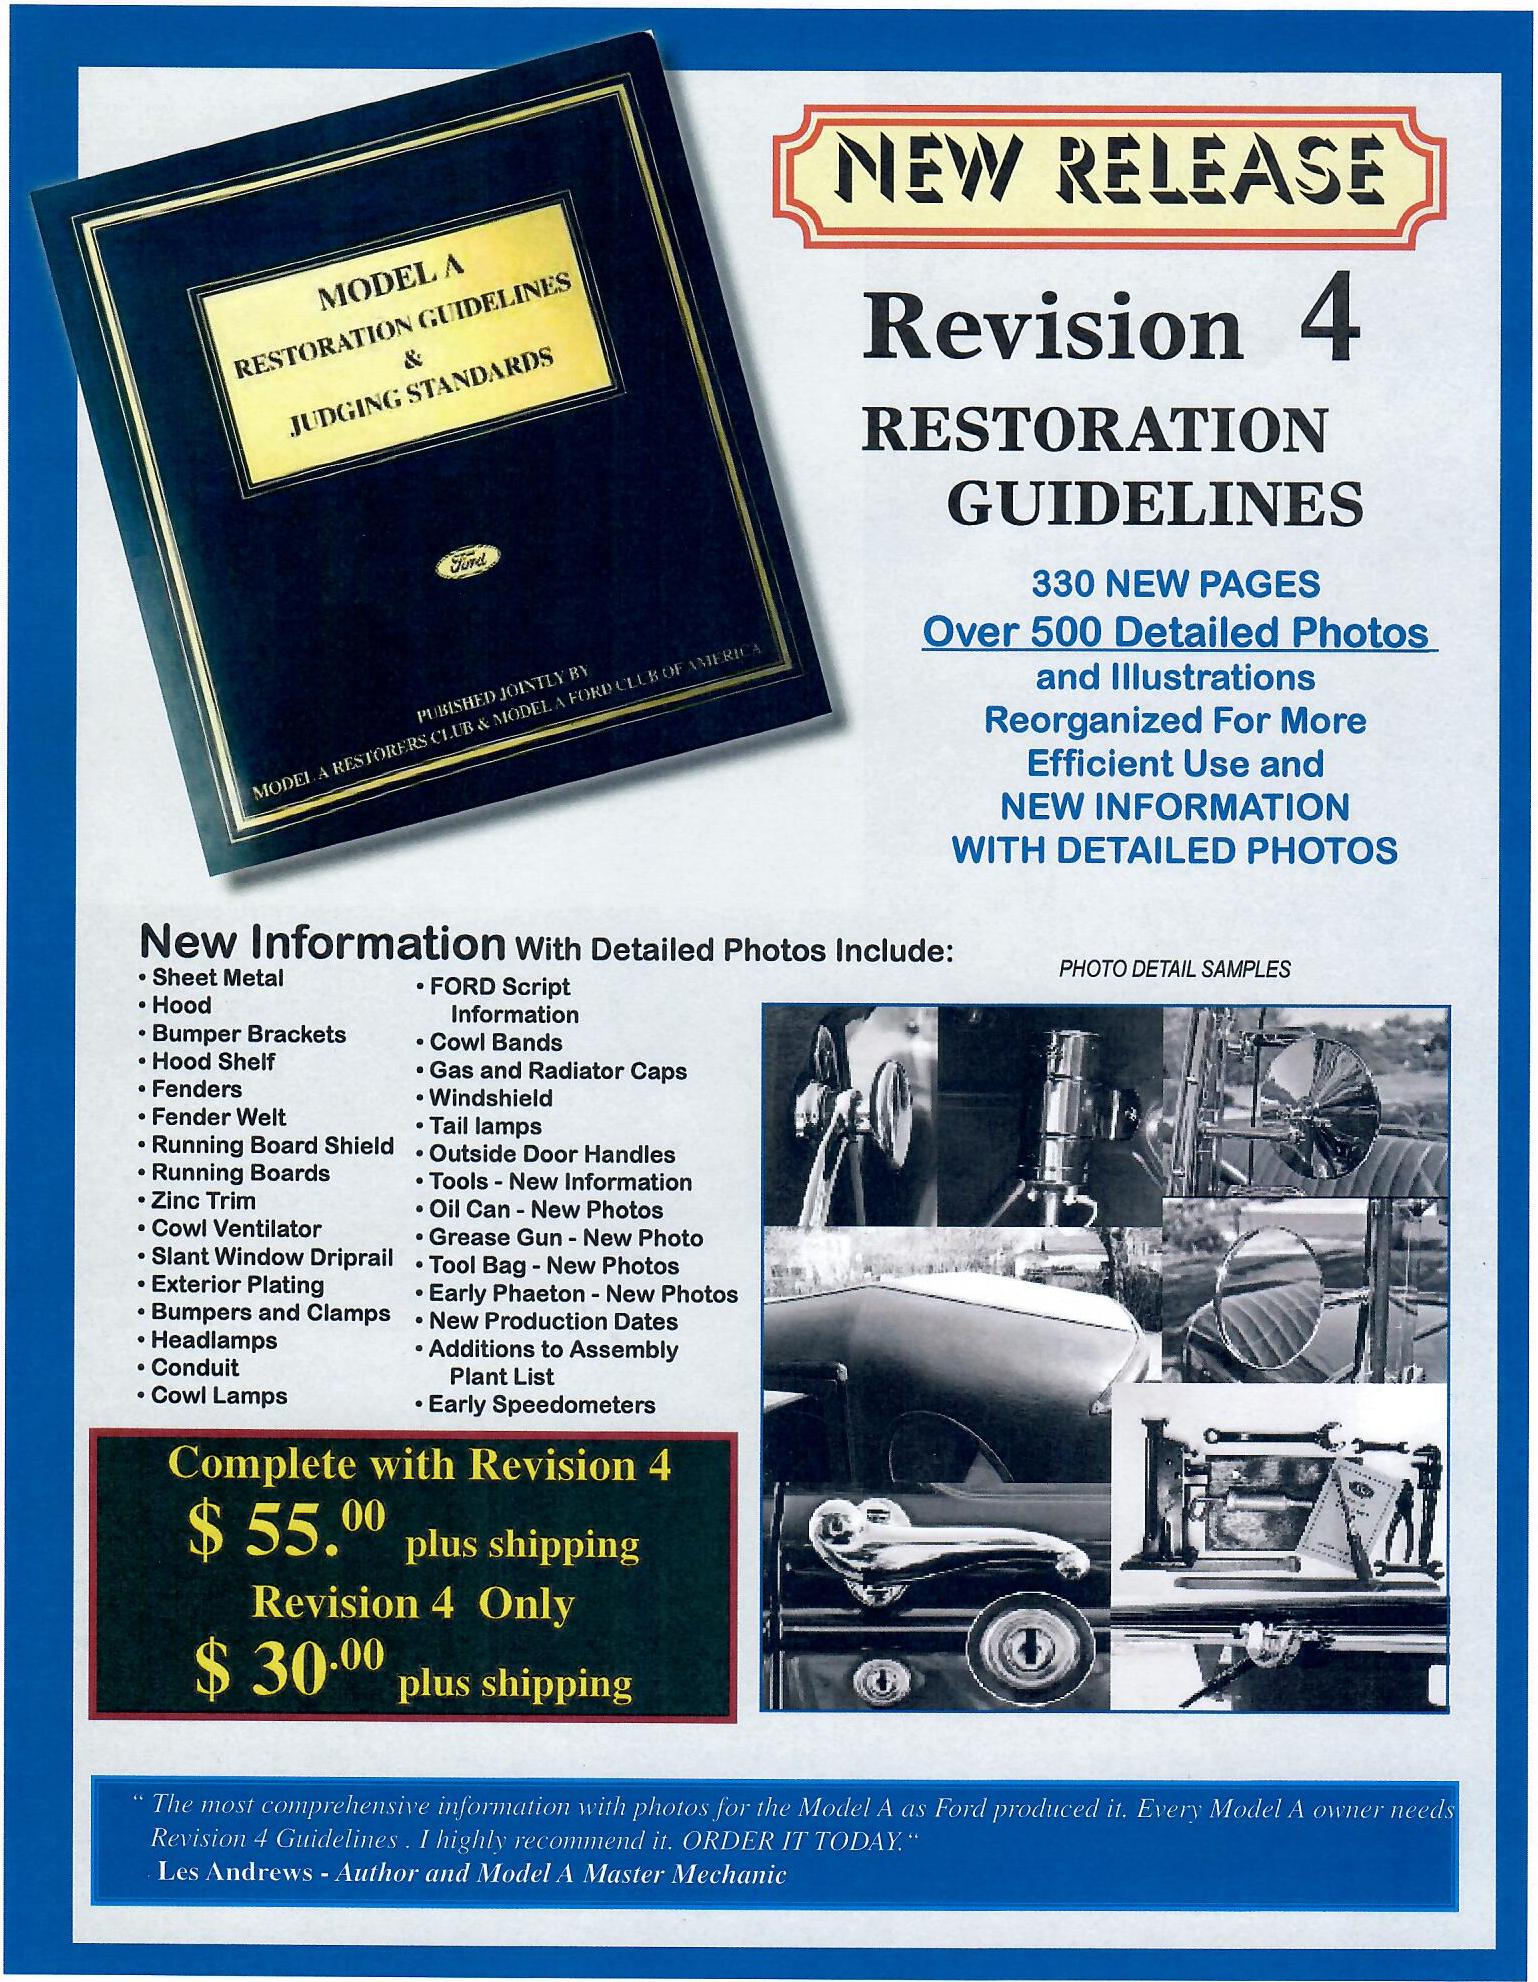 Revision 4 Model A Restoration Guidelines (2016)